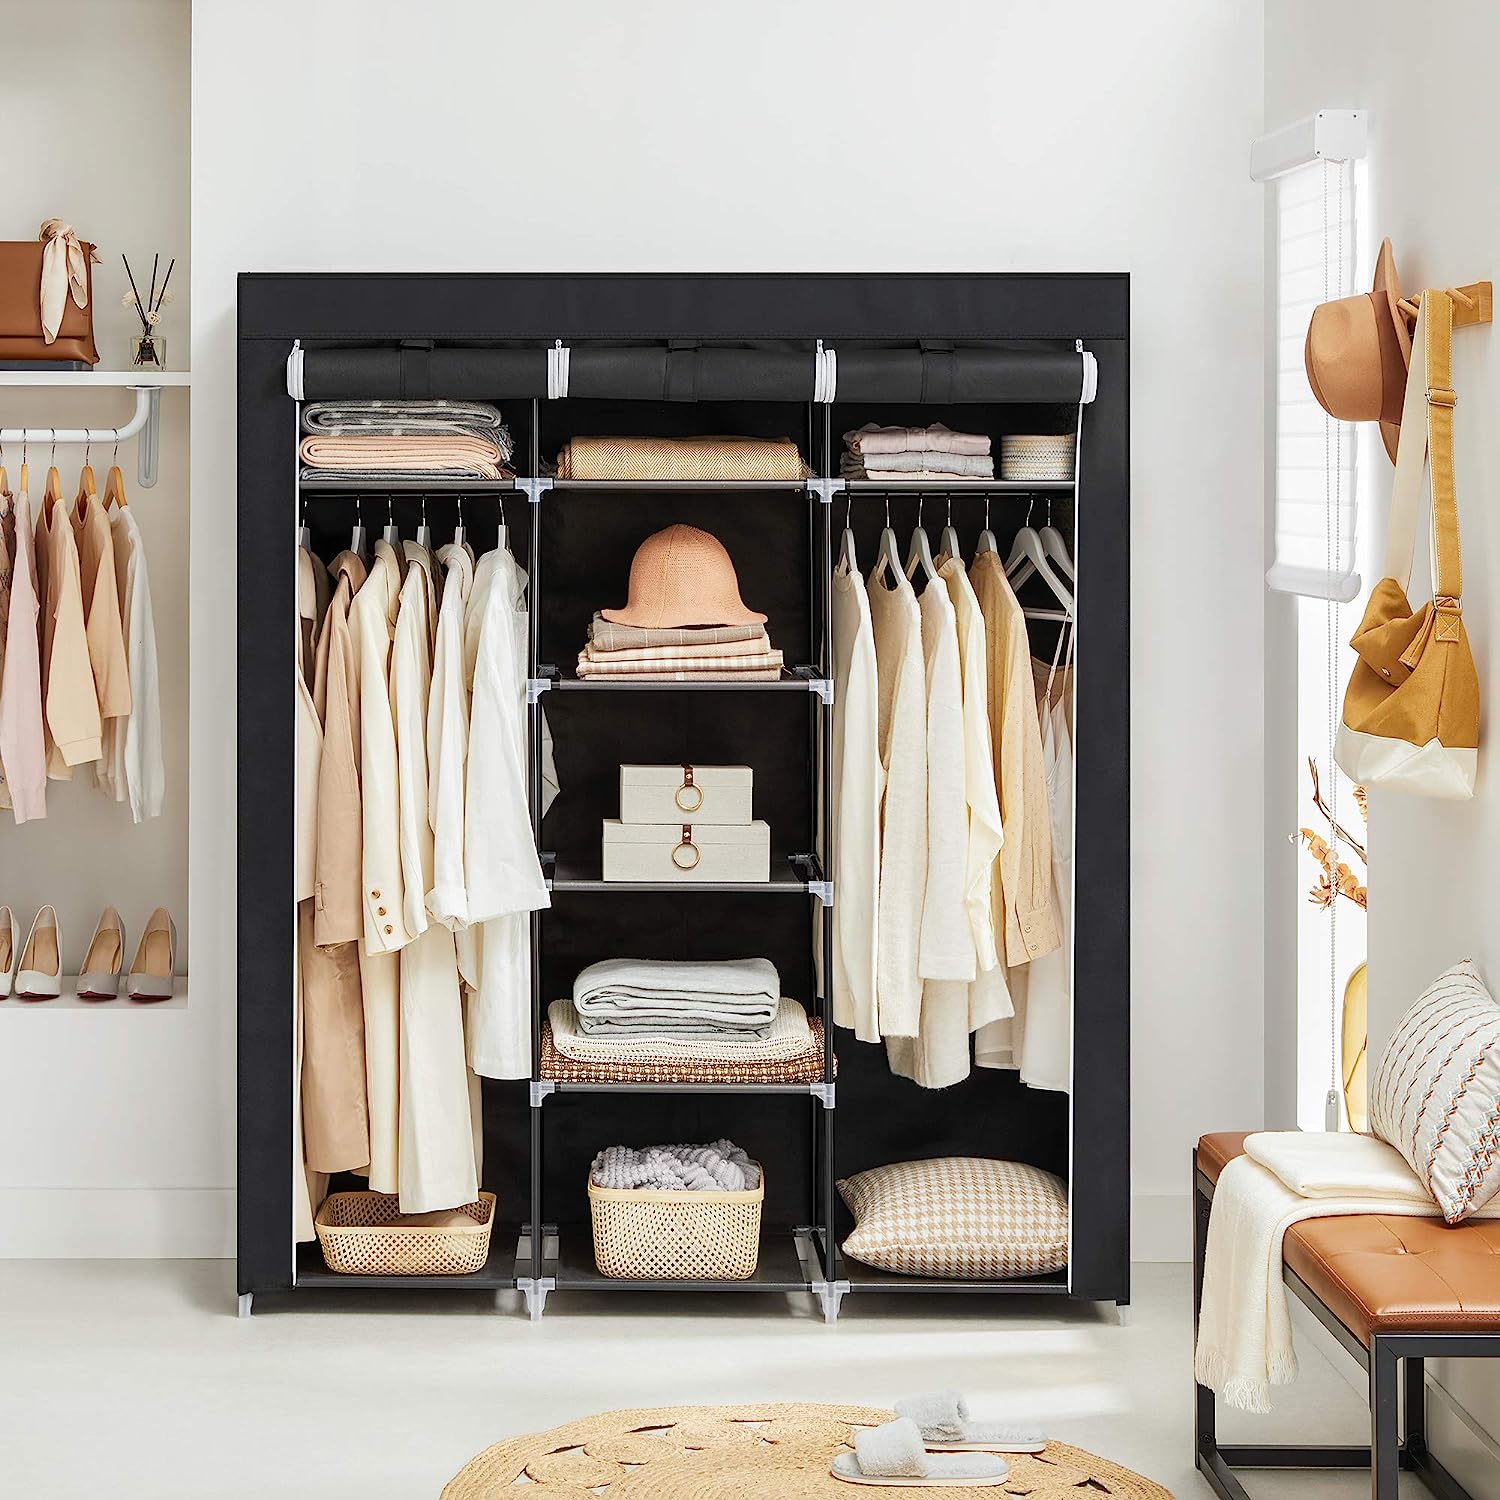 Folding Wardrobe, Fabric Cabinet, Foldable Coat Rack with 2 Clothes Rails, 175 x 150 x 45 cm, Black, Canvas